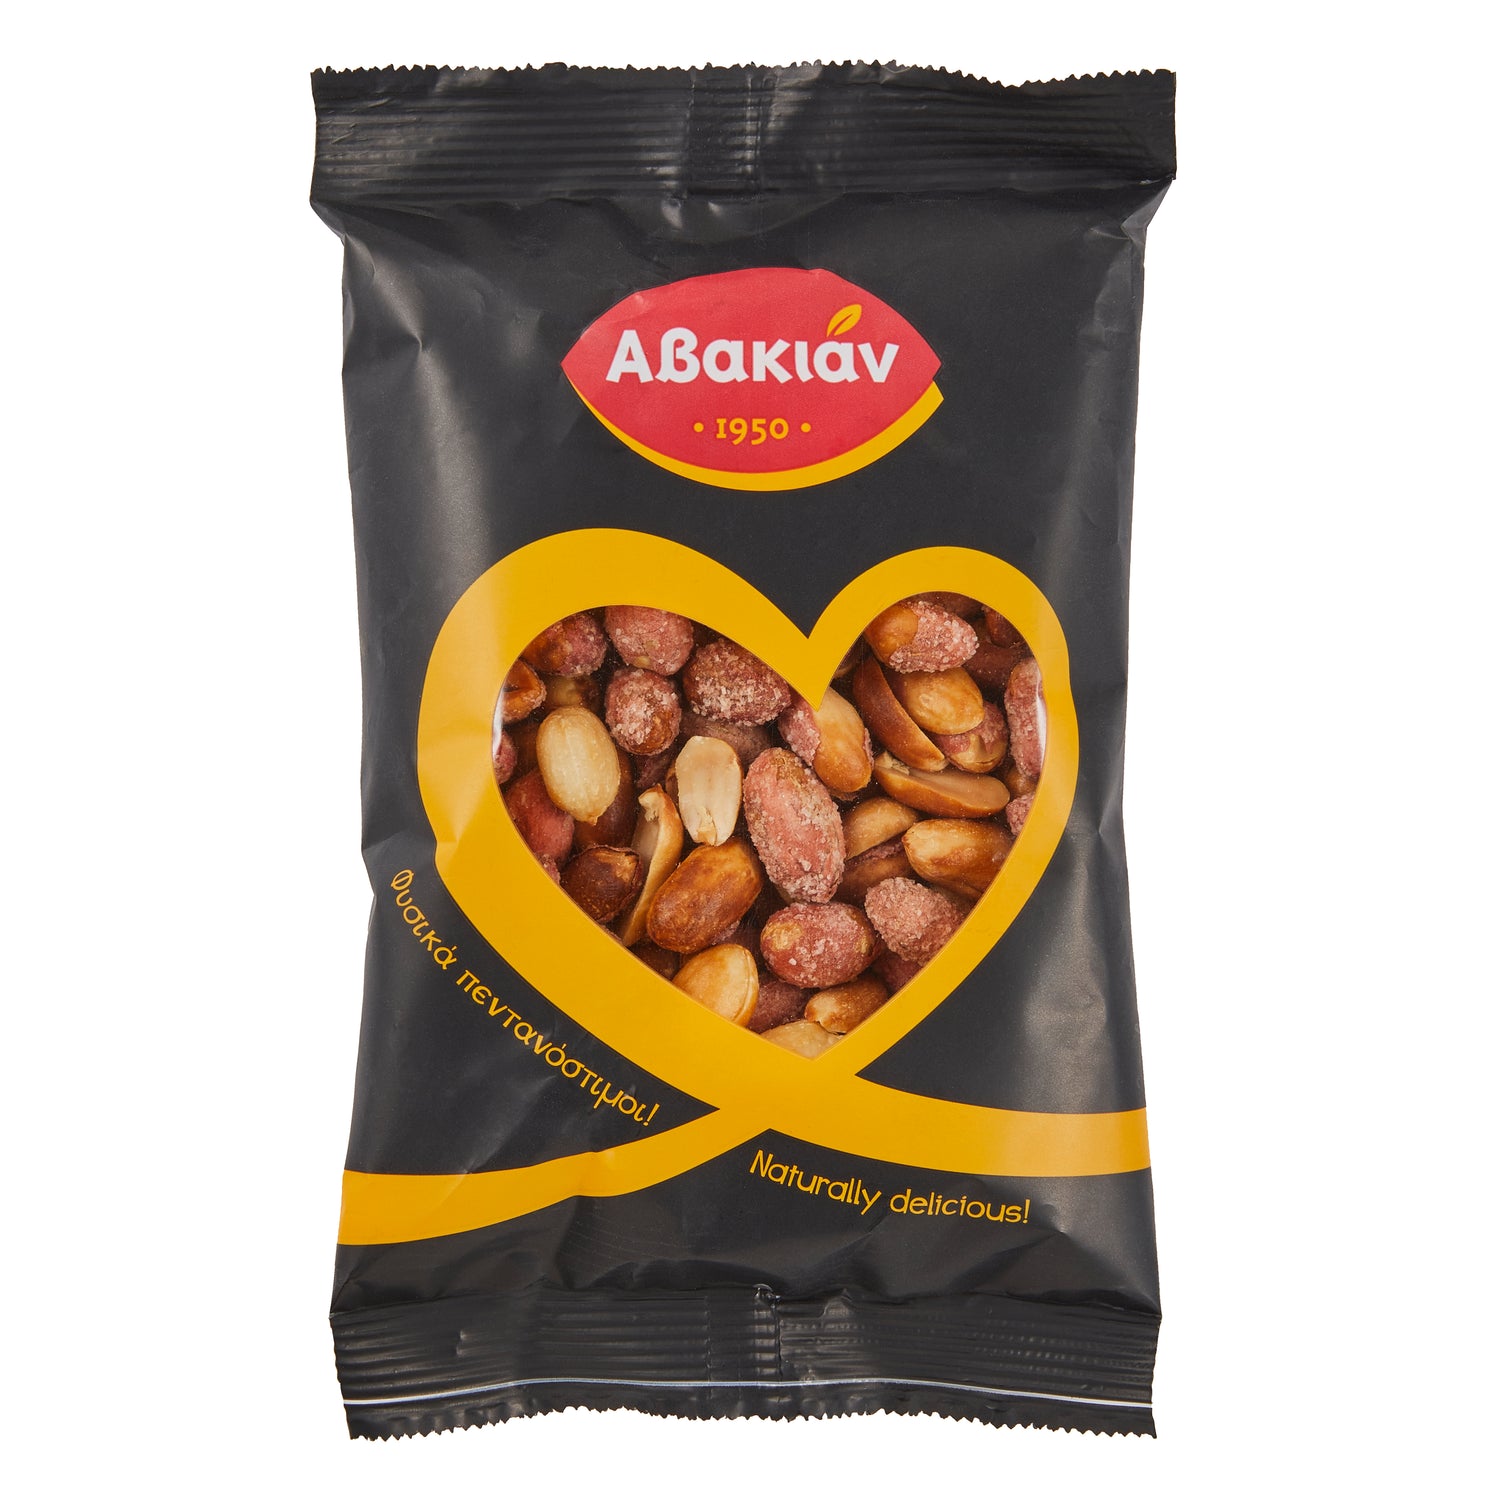 Erdnüsse gesalzene Abakian 180 g